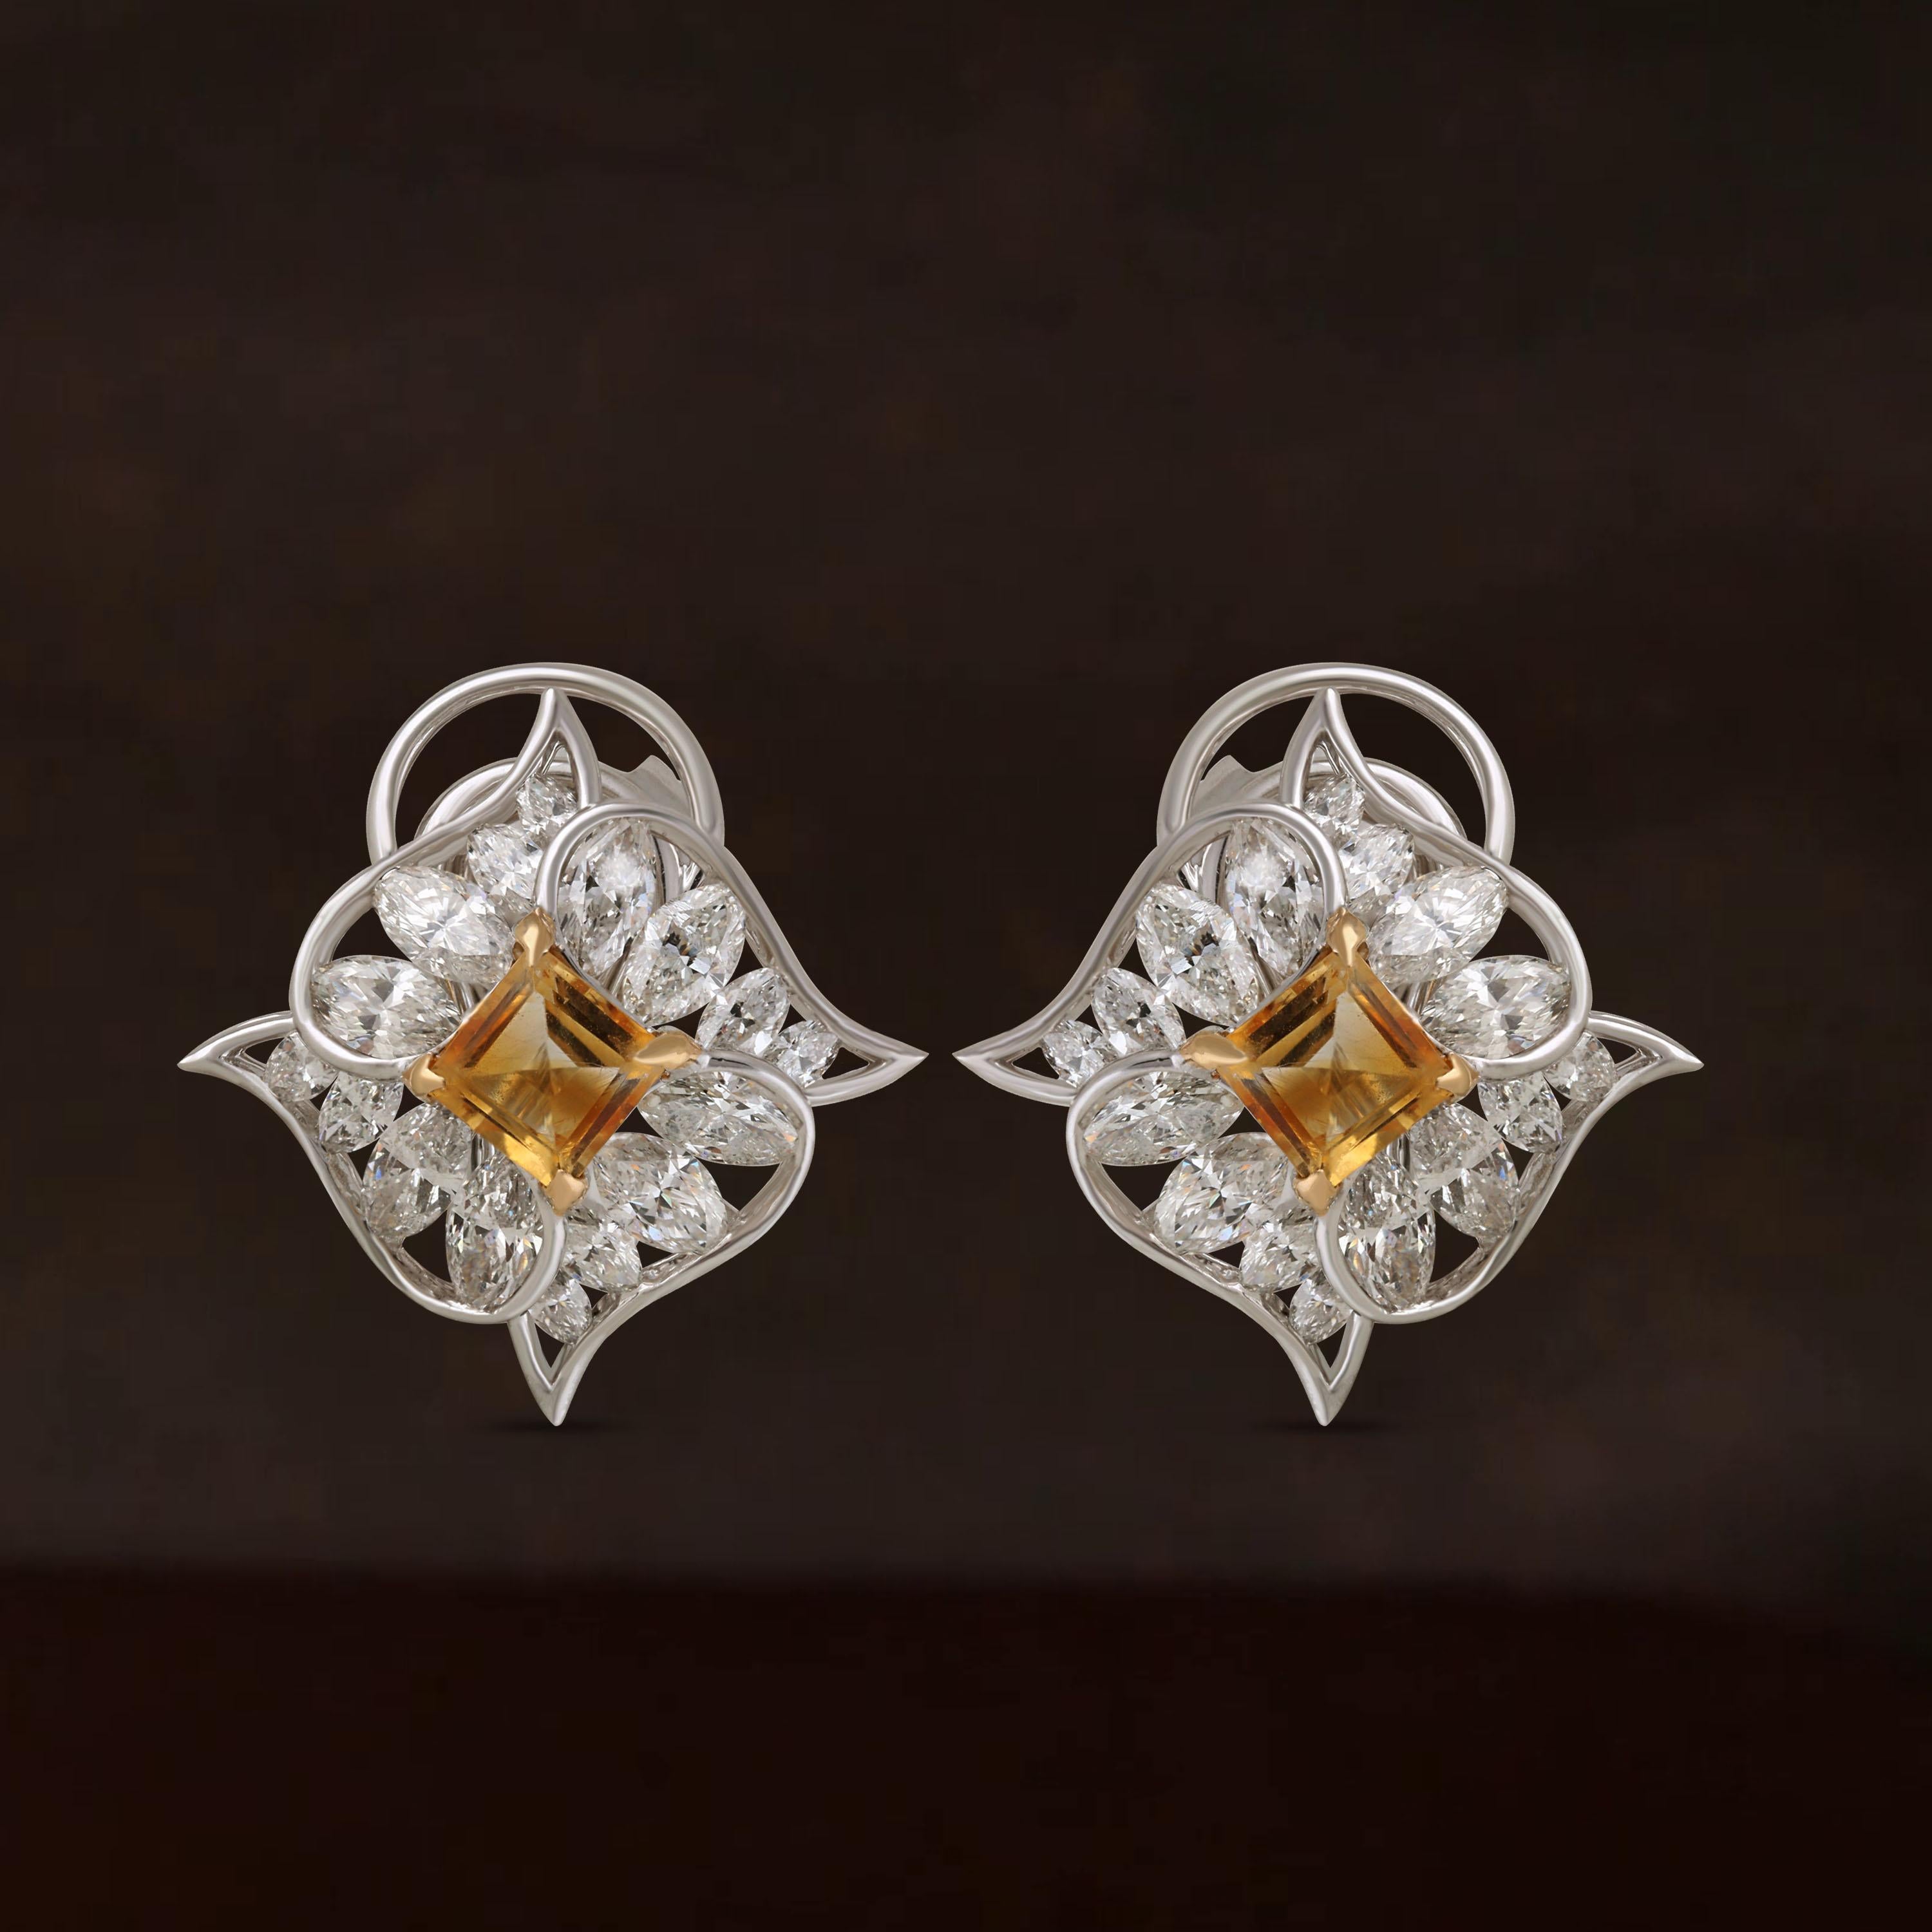 Studio Rêves Edgy Diamond and Citrine Stud Earrings in 18 Karat Gold For Sale 1